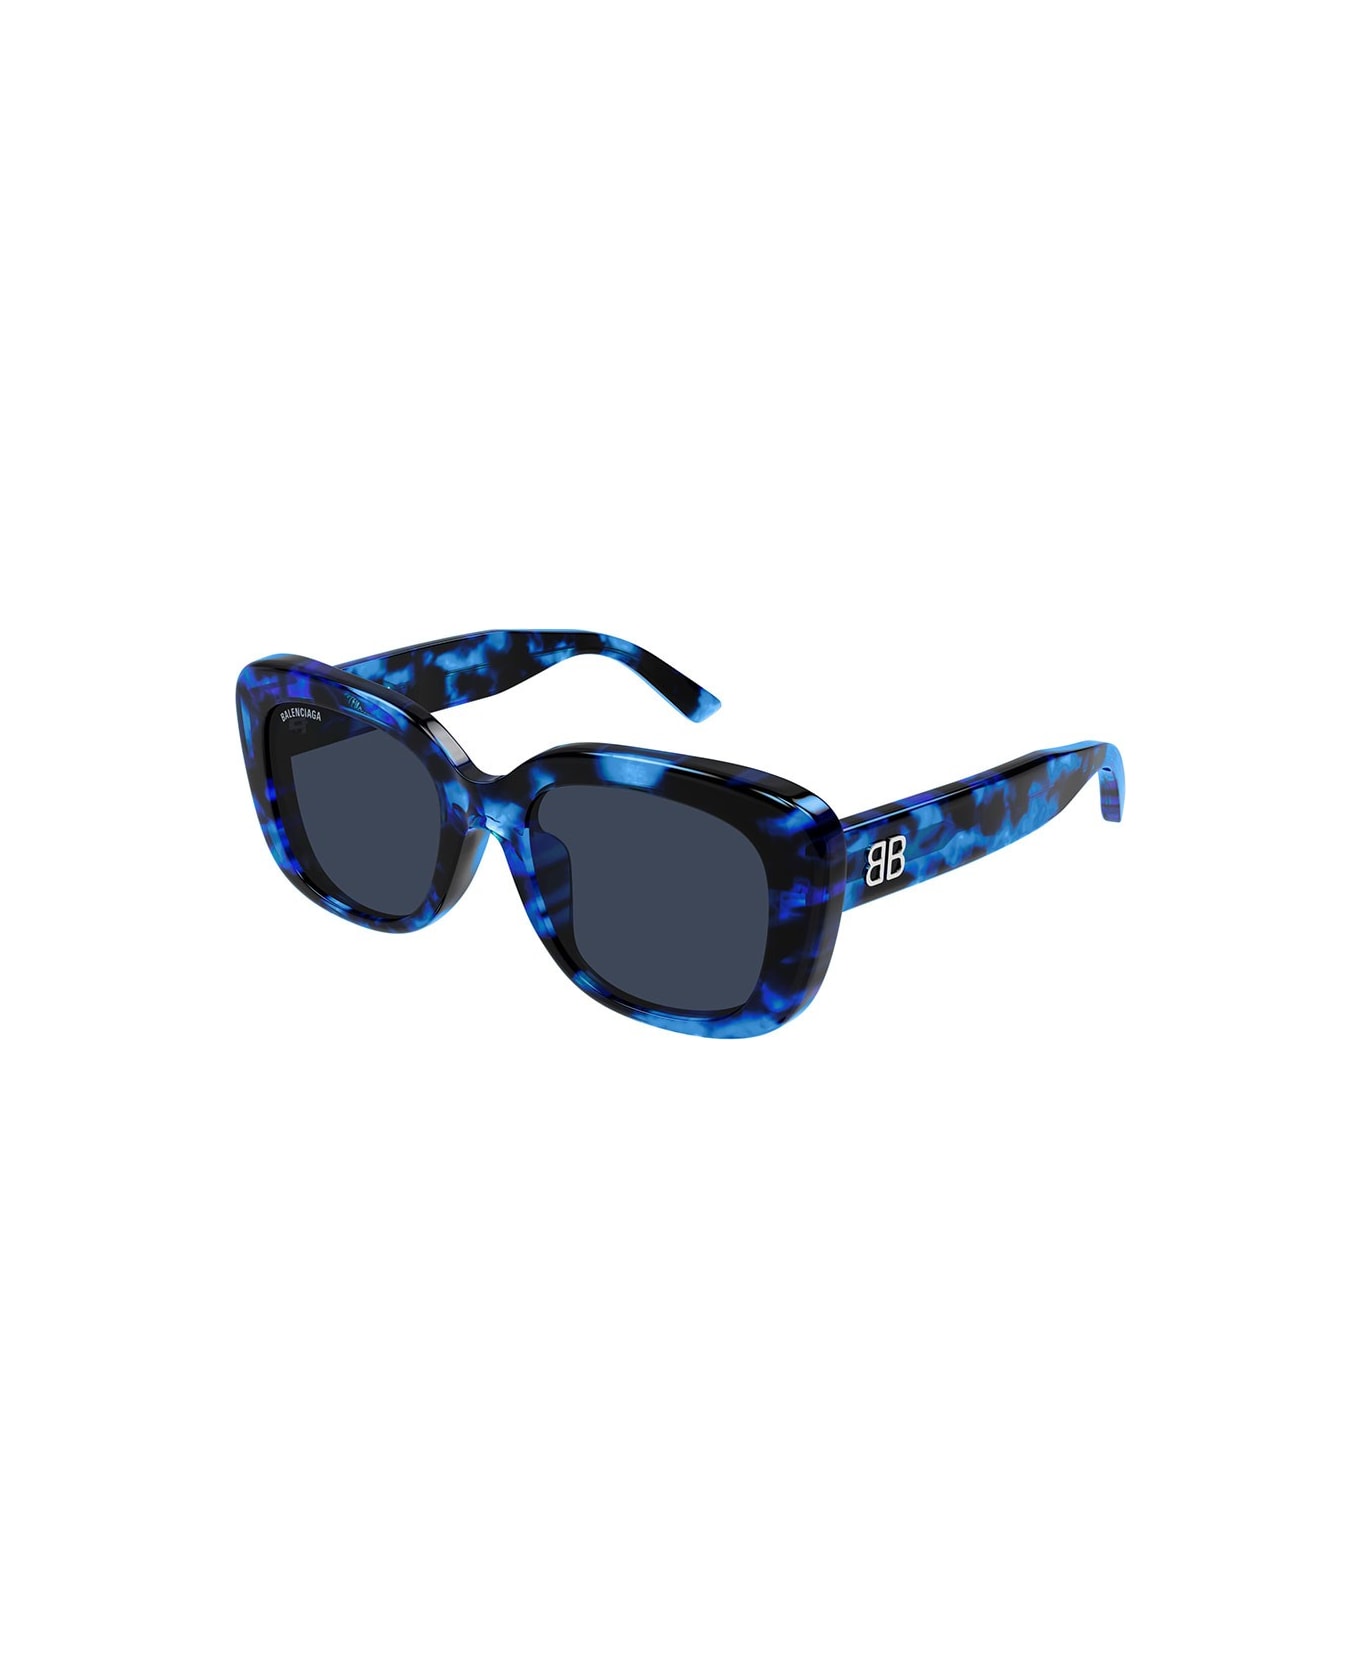 Balenciaga Eyewear Sunglasses Sunglasses - 004 BLUE BLUE BLUE